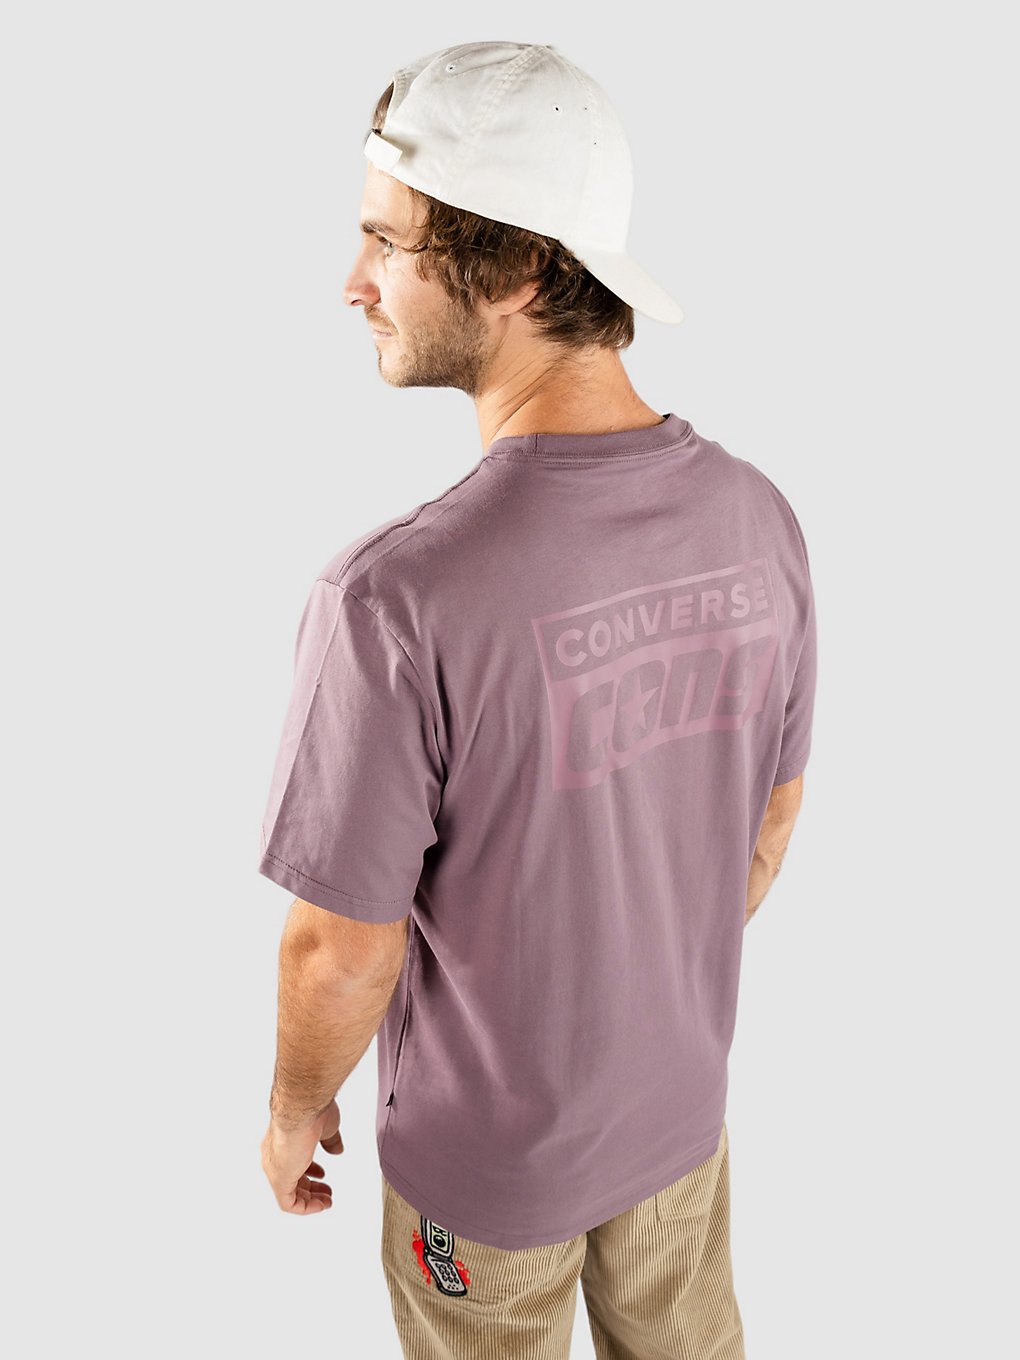 Converse Cons T-Shirt smoke realm kaufen